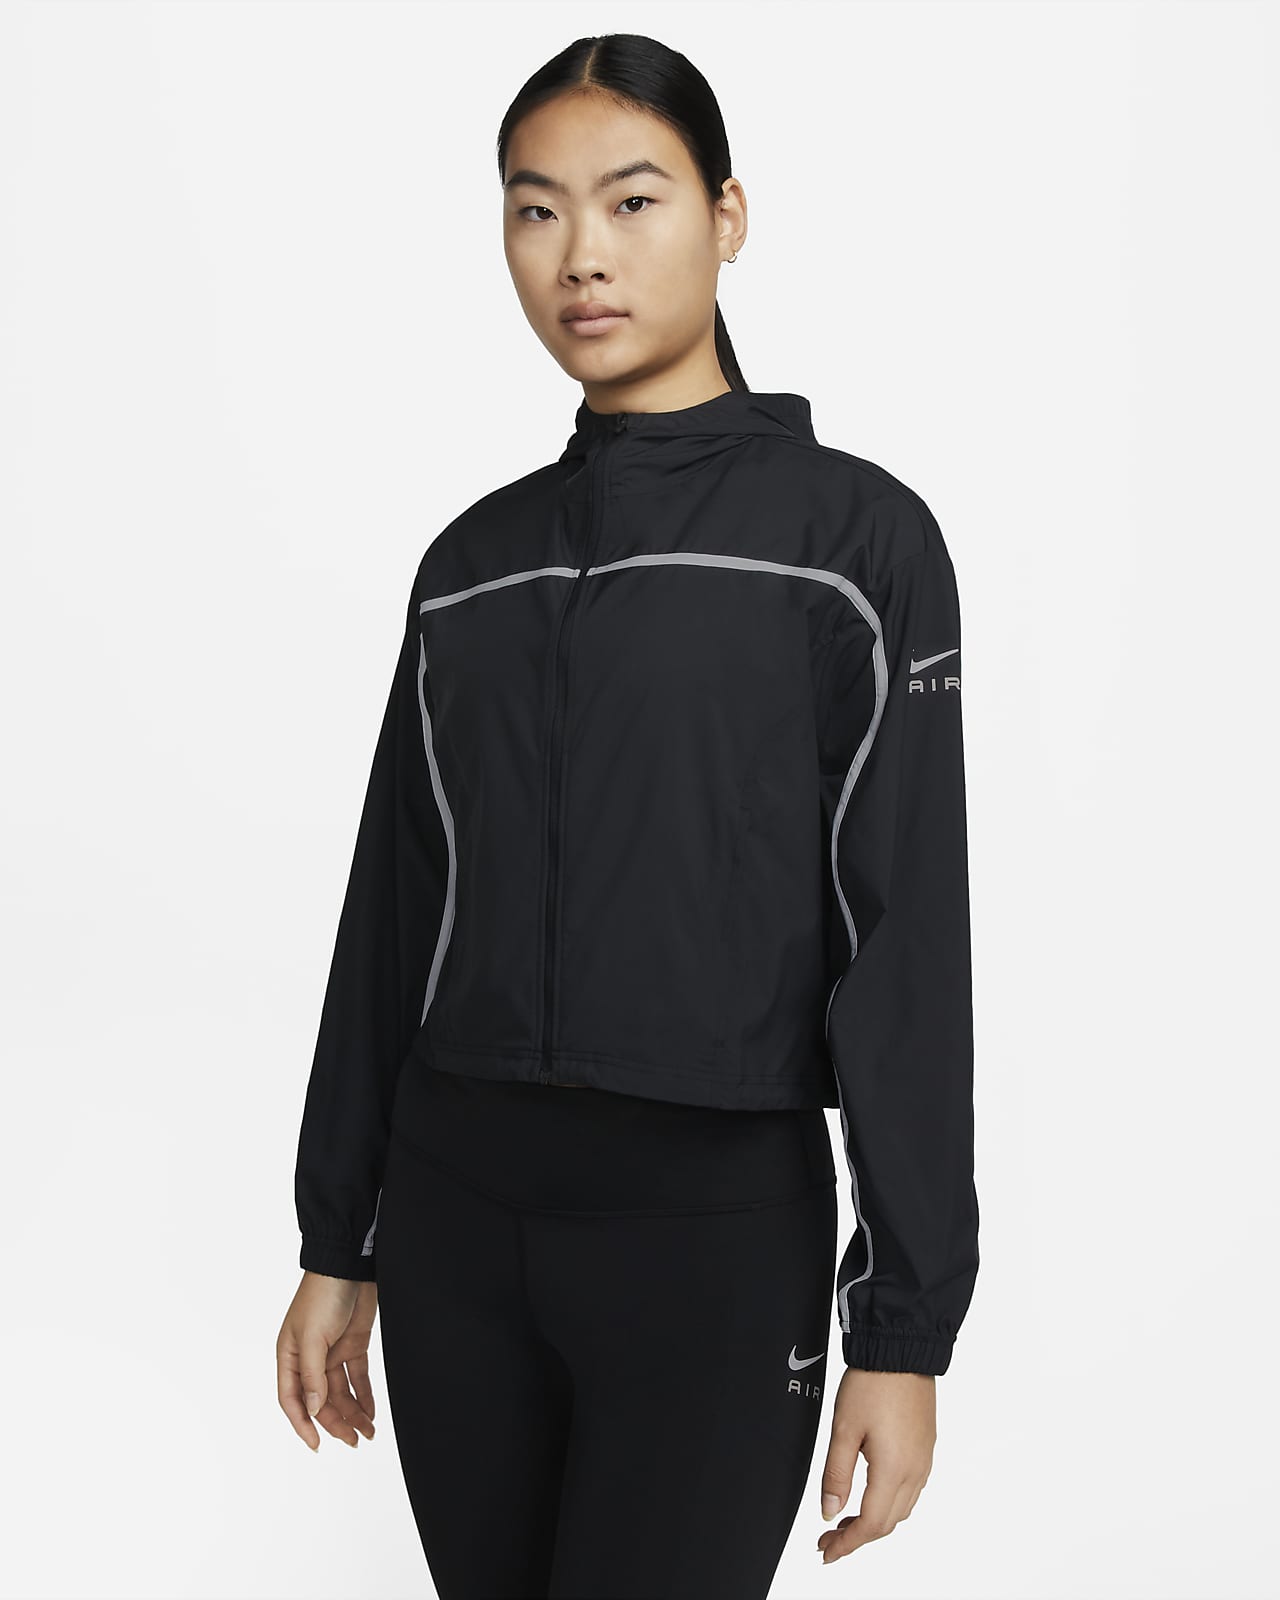 Contradecir creencia familia Nike Air Women's Running Jacket. Nike ID